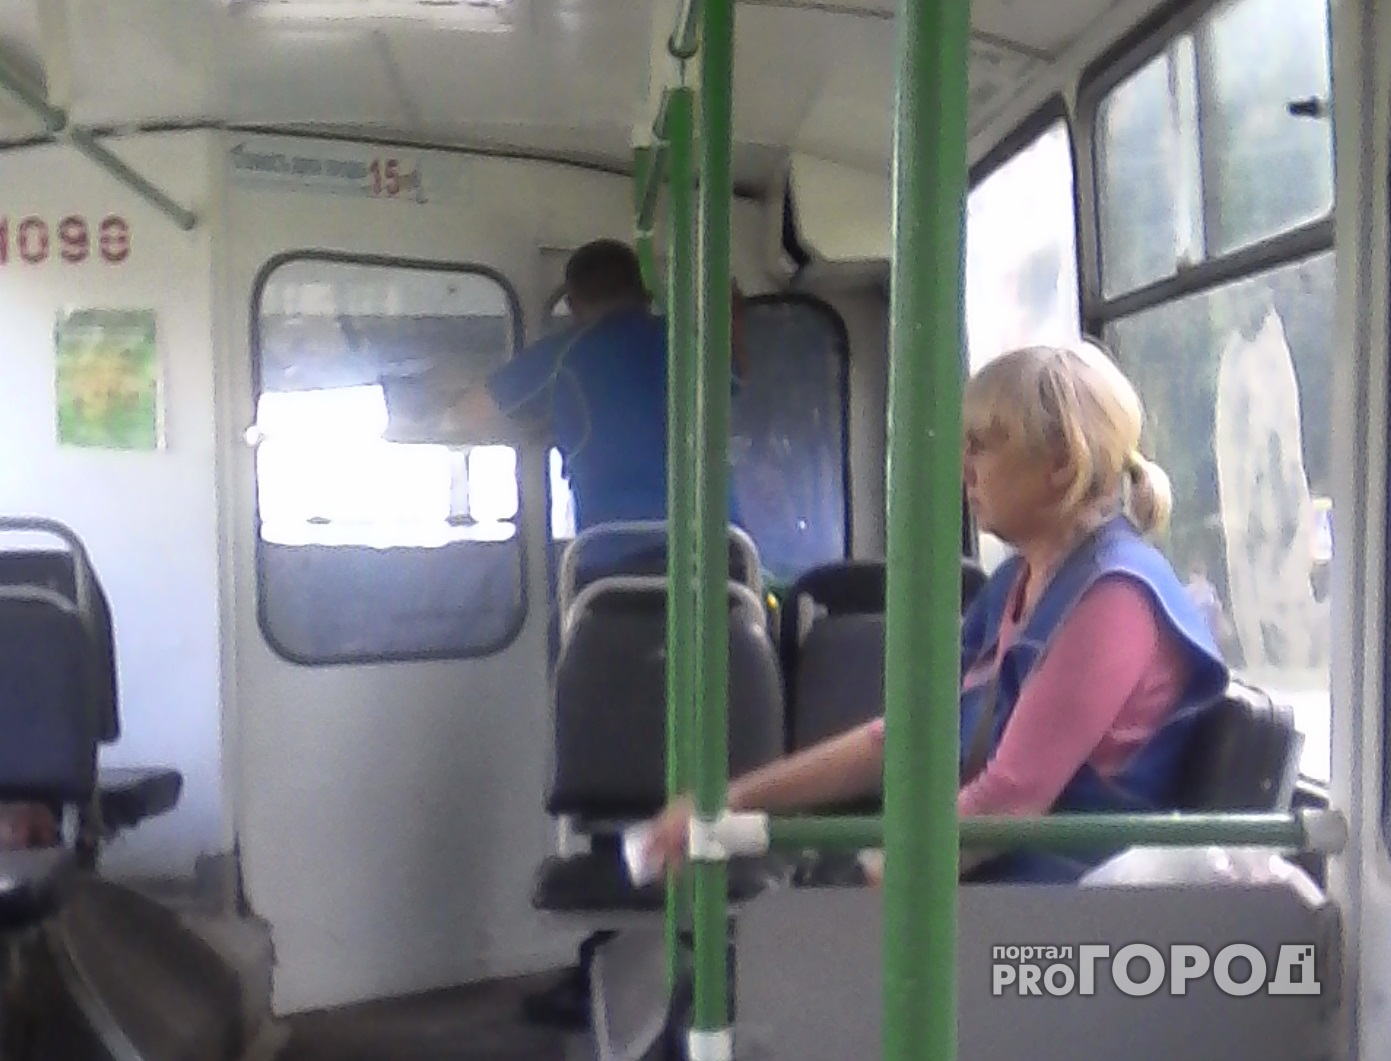 В Новочебоксарске "заяц" напал с кулаками на водителя троллейбуса